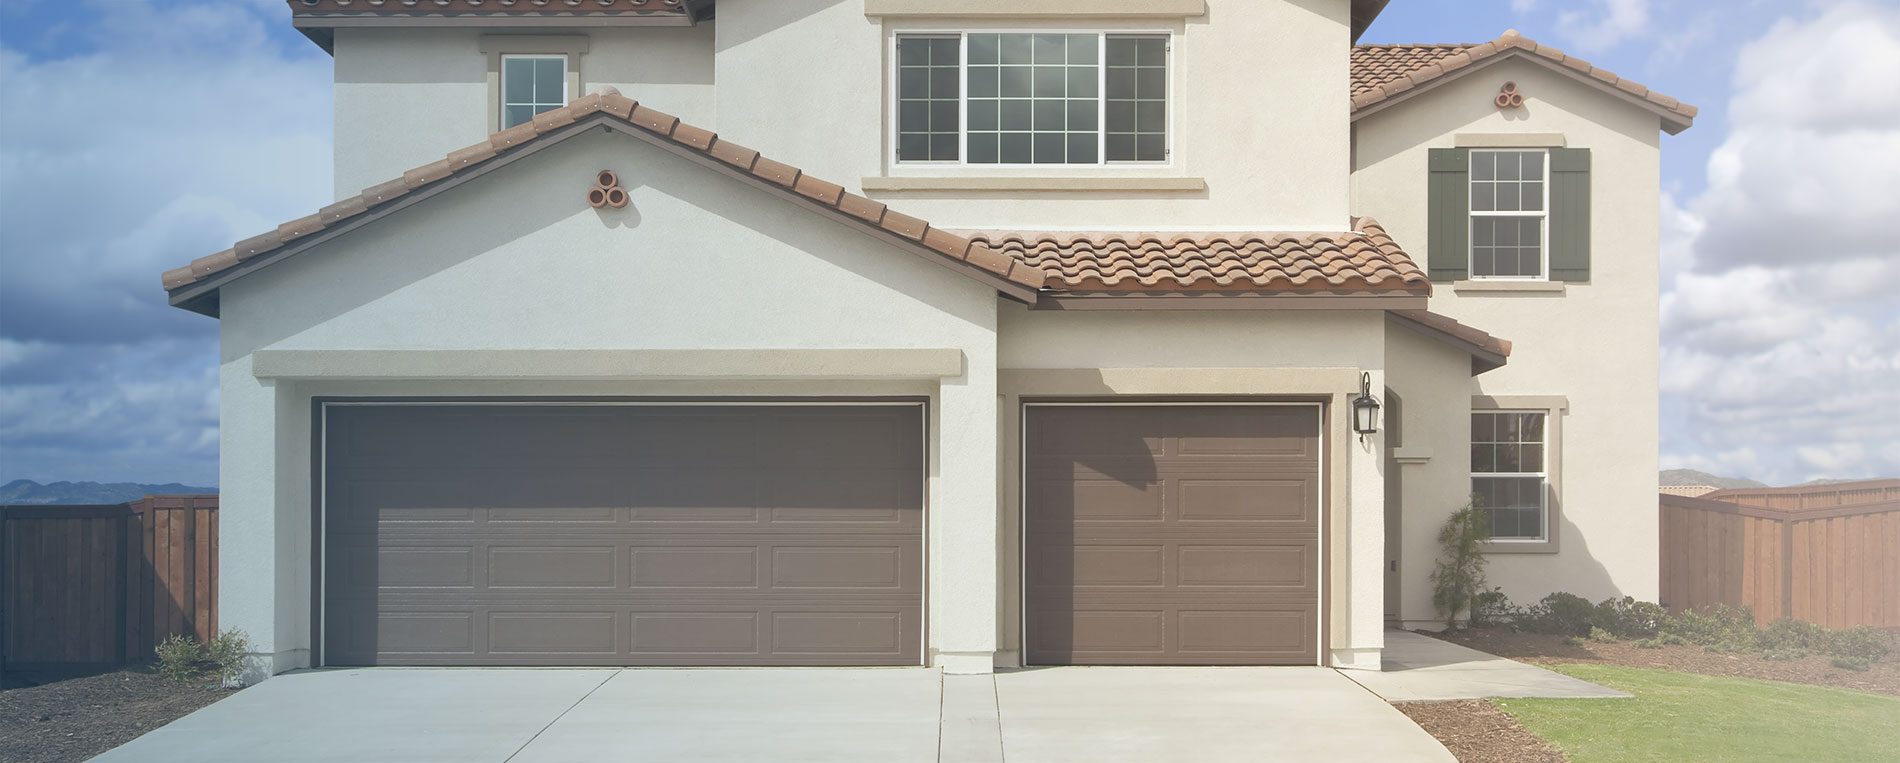 Garage Door Clicker Maintenance Basics